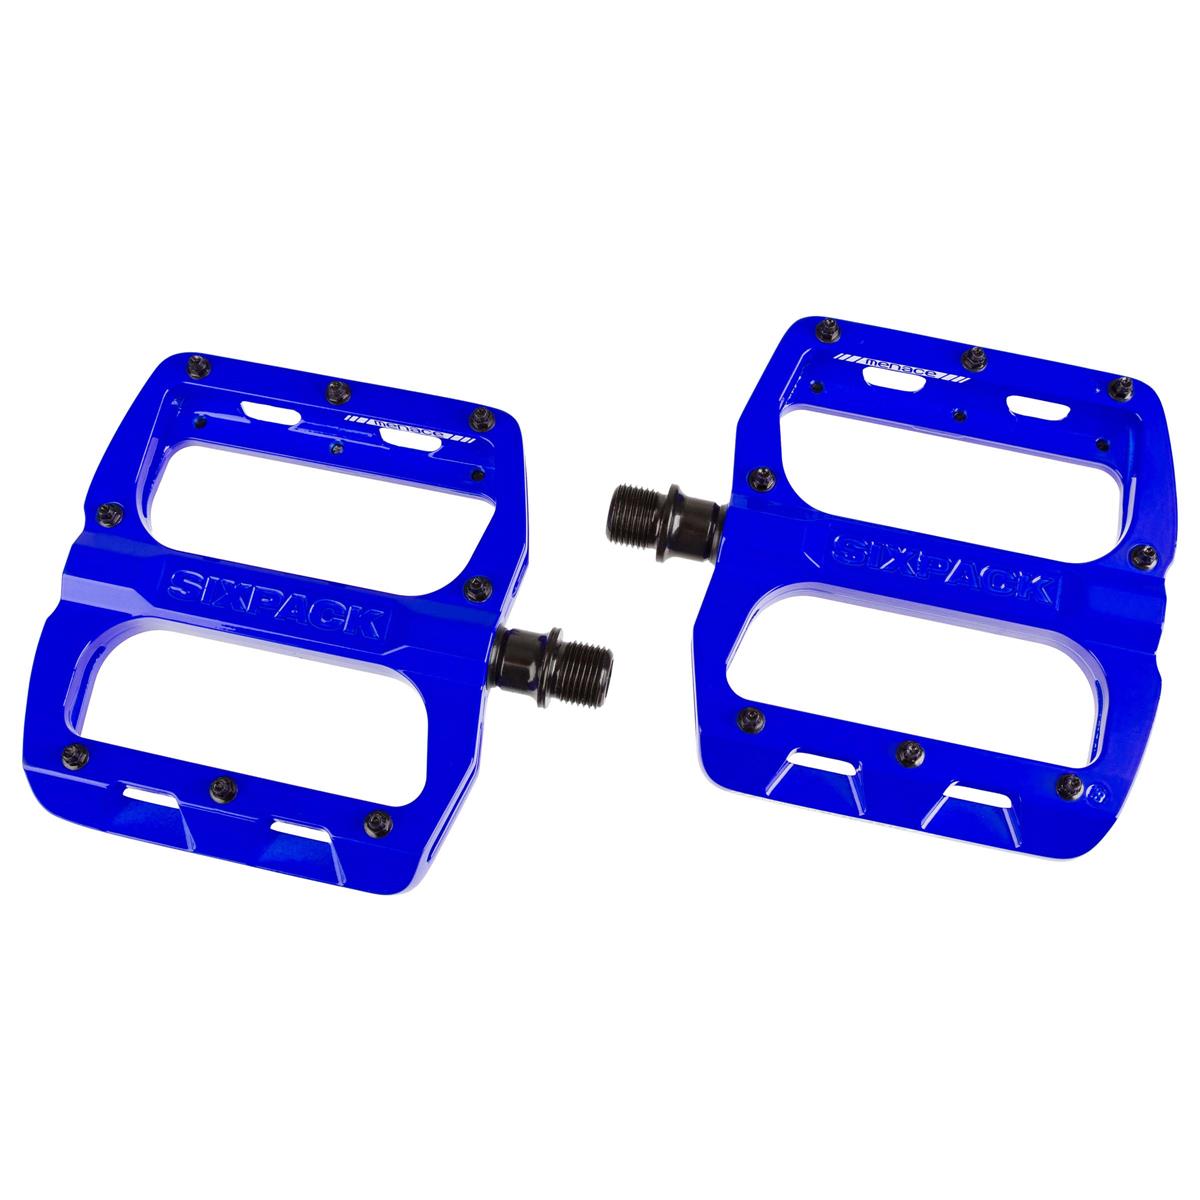 Sixpack Pedali Menace Blu, 95x110 mm Plattform, 28 M4 Pins, 1 Paio